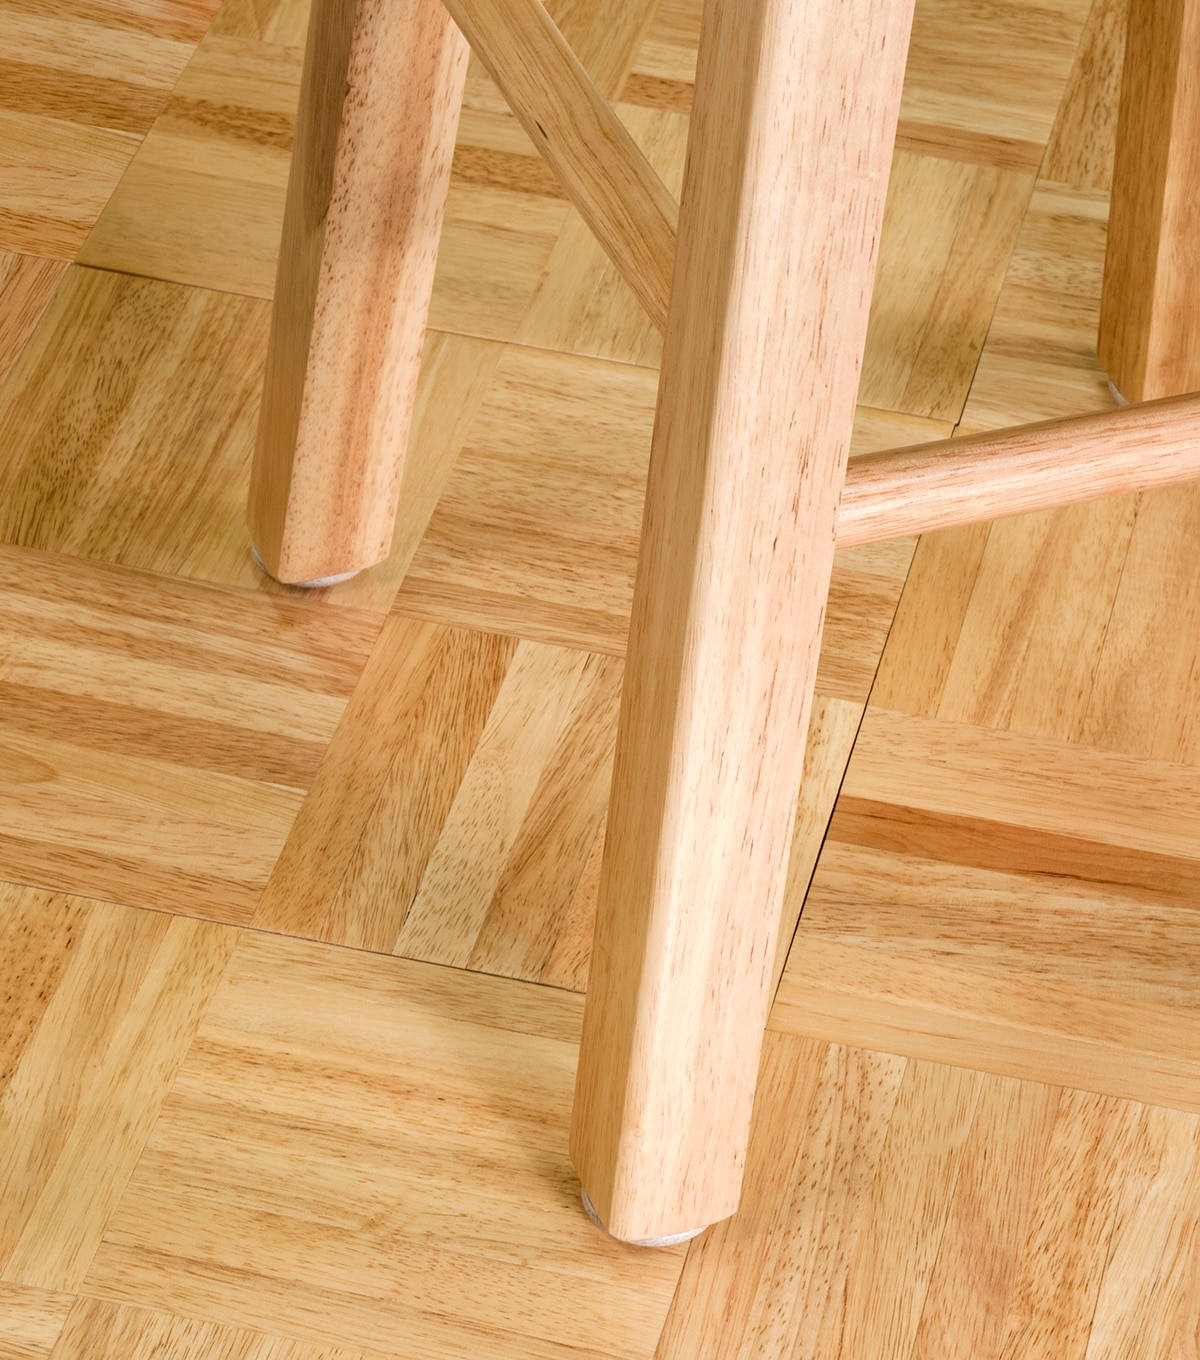 Softtouch 1 Premium Felt Pads For Uneven Floors Linen 16pc Joann